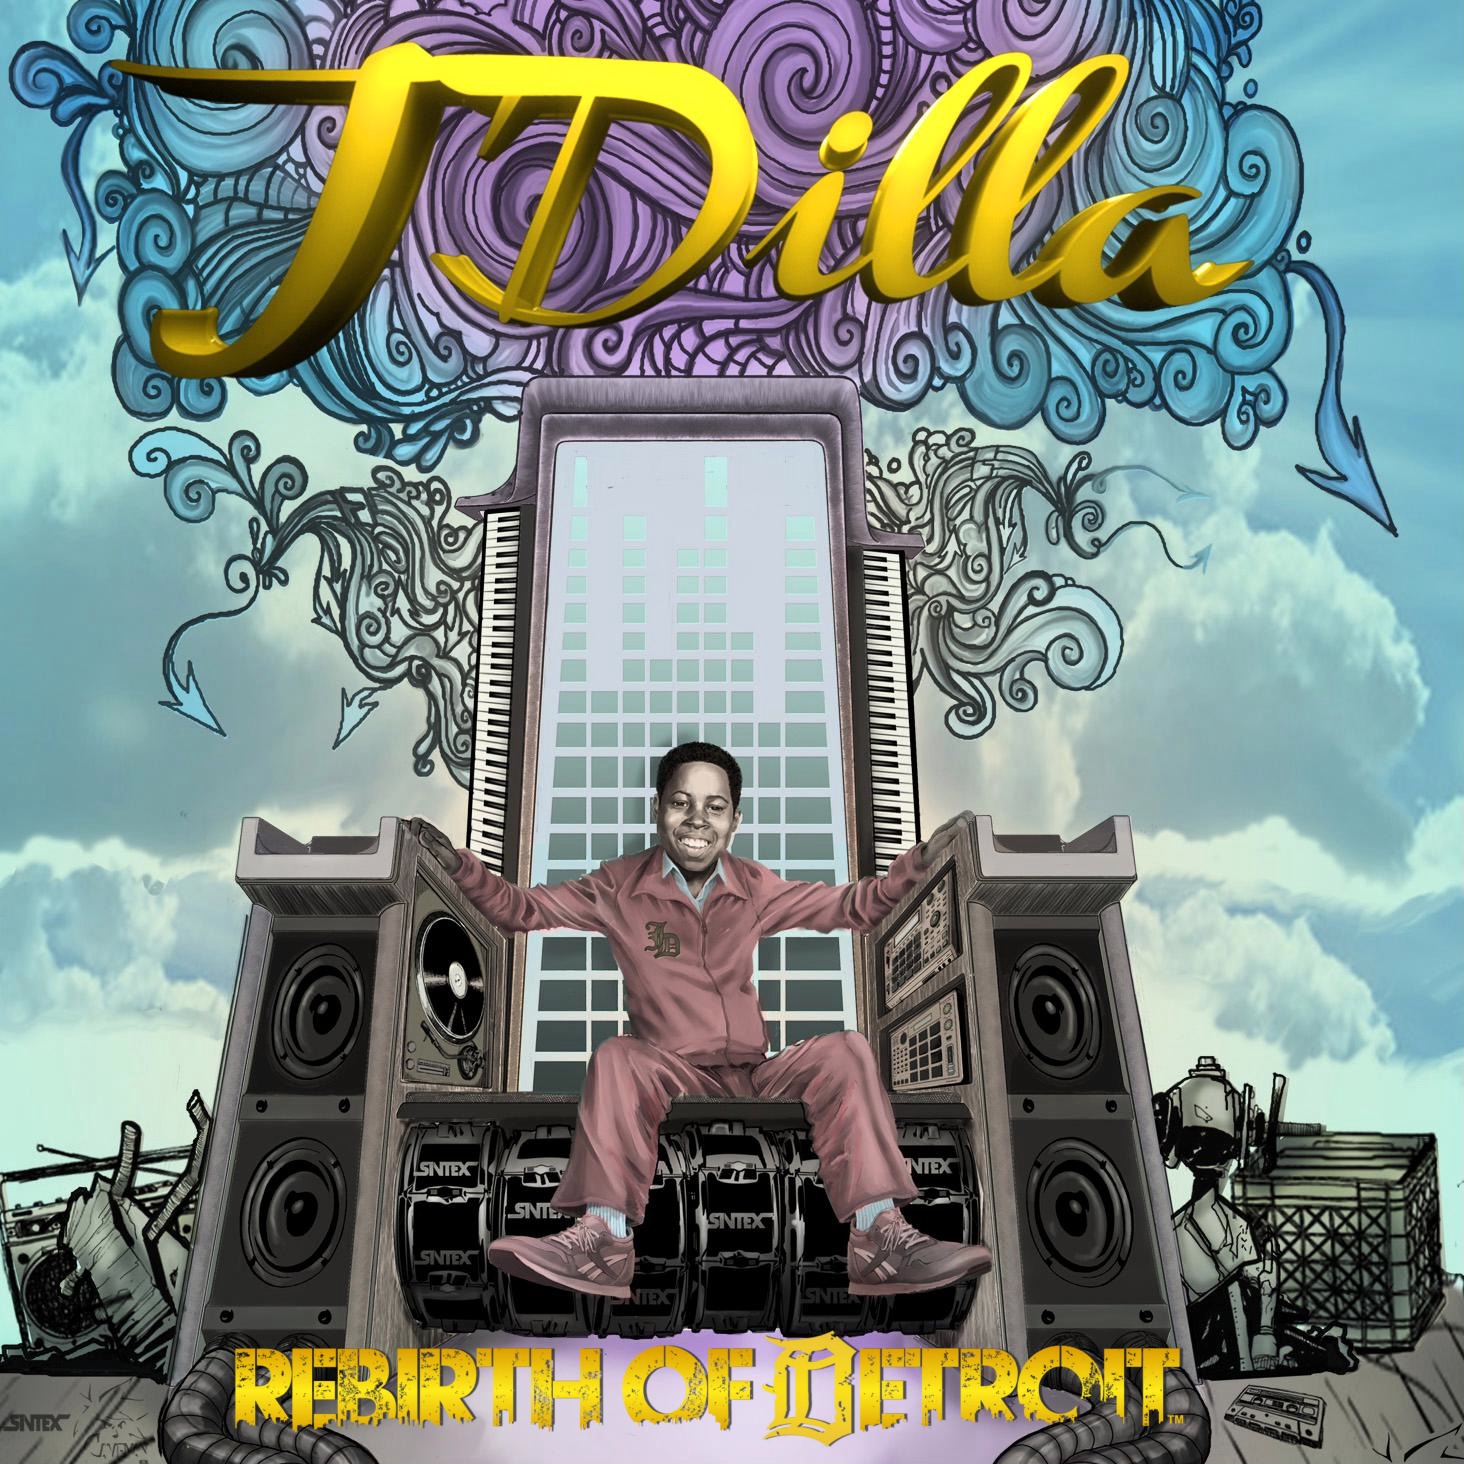 J Dilla – Rebirth Of Detroit (Album Stream)